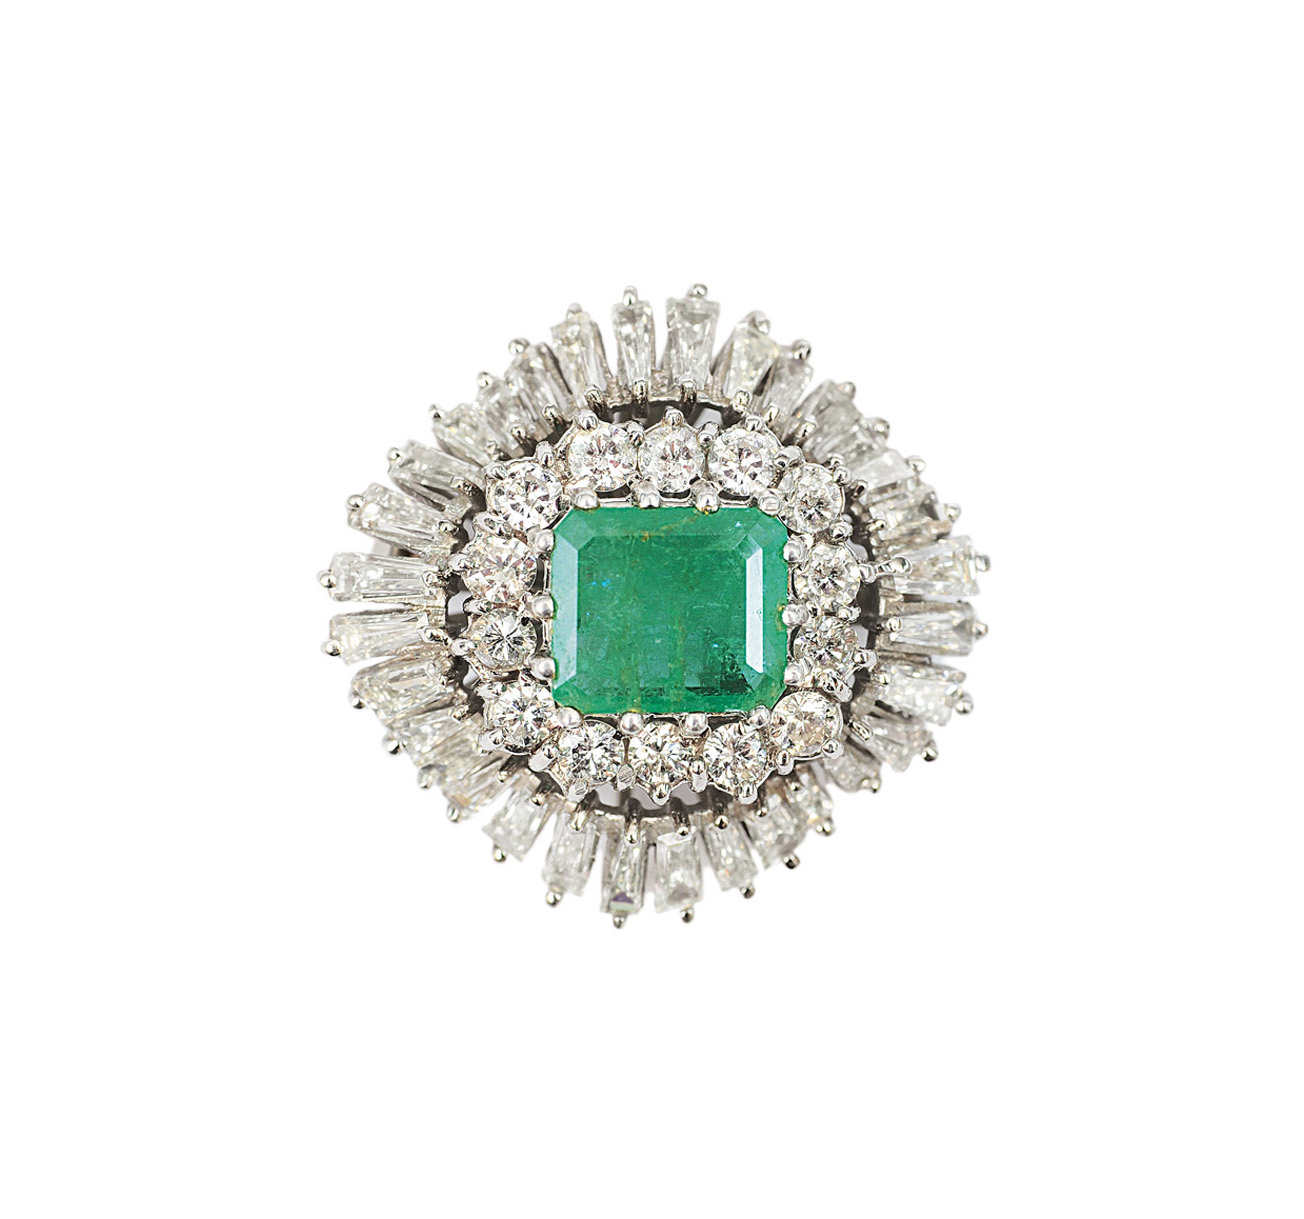 A small emerald diamond brooch